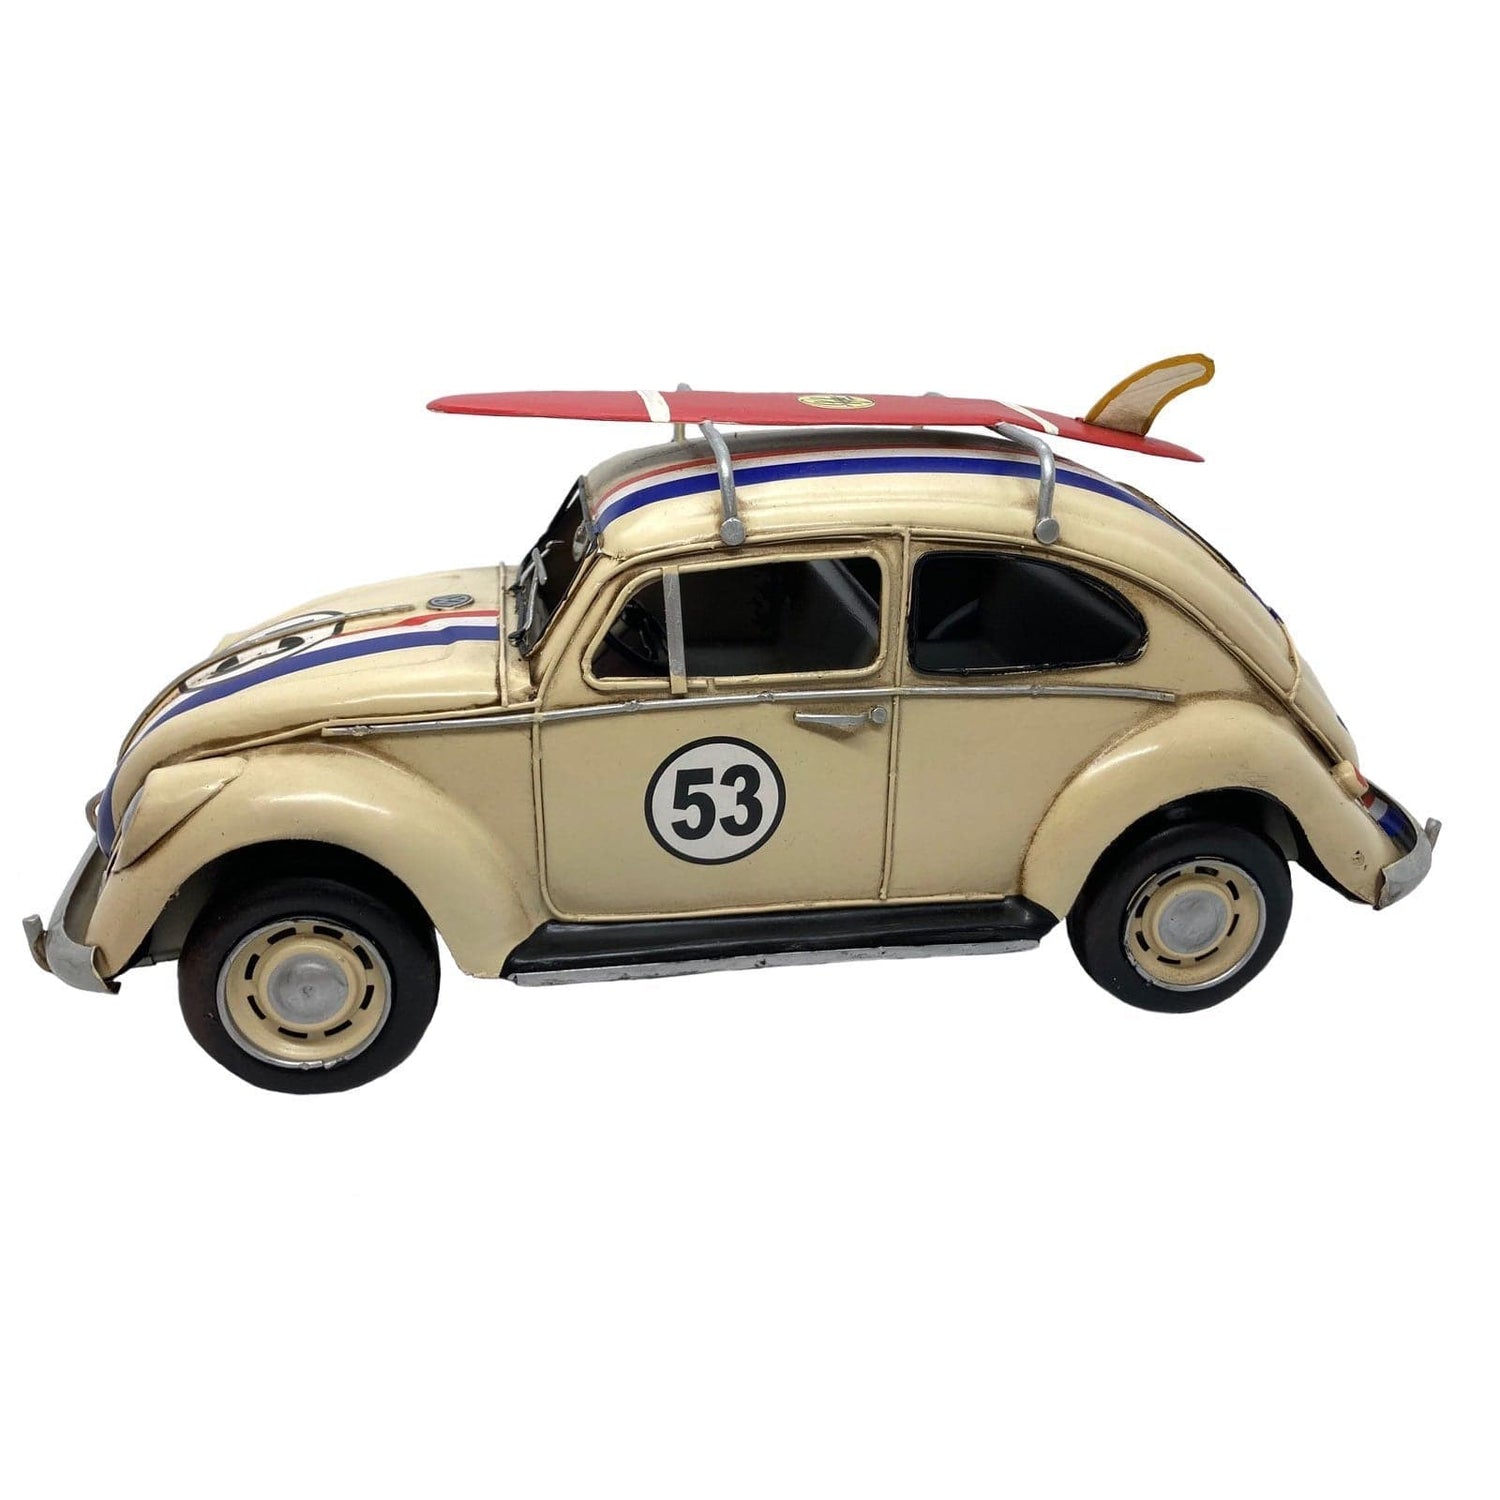 34cm Racing Stripe VW Beetle with Surfboard